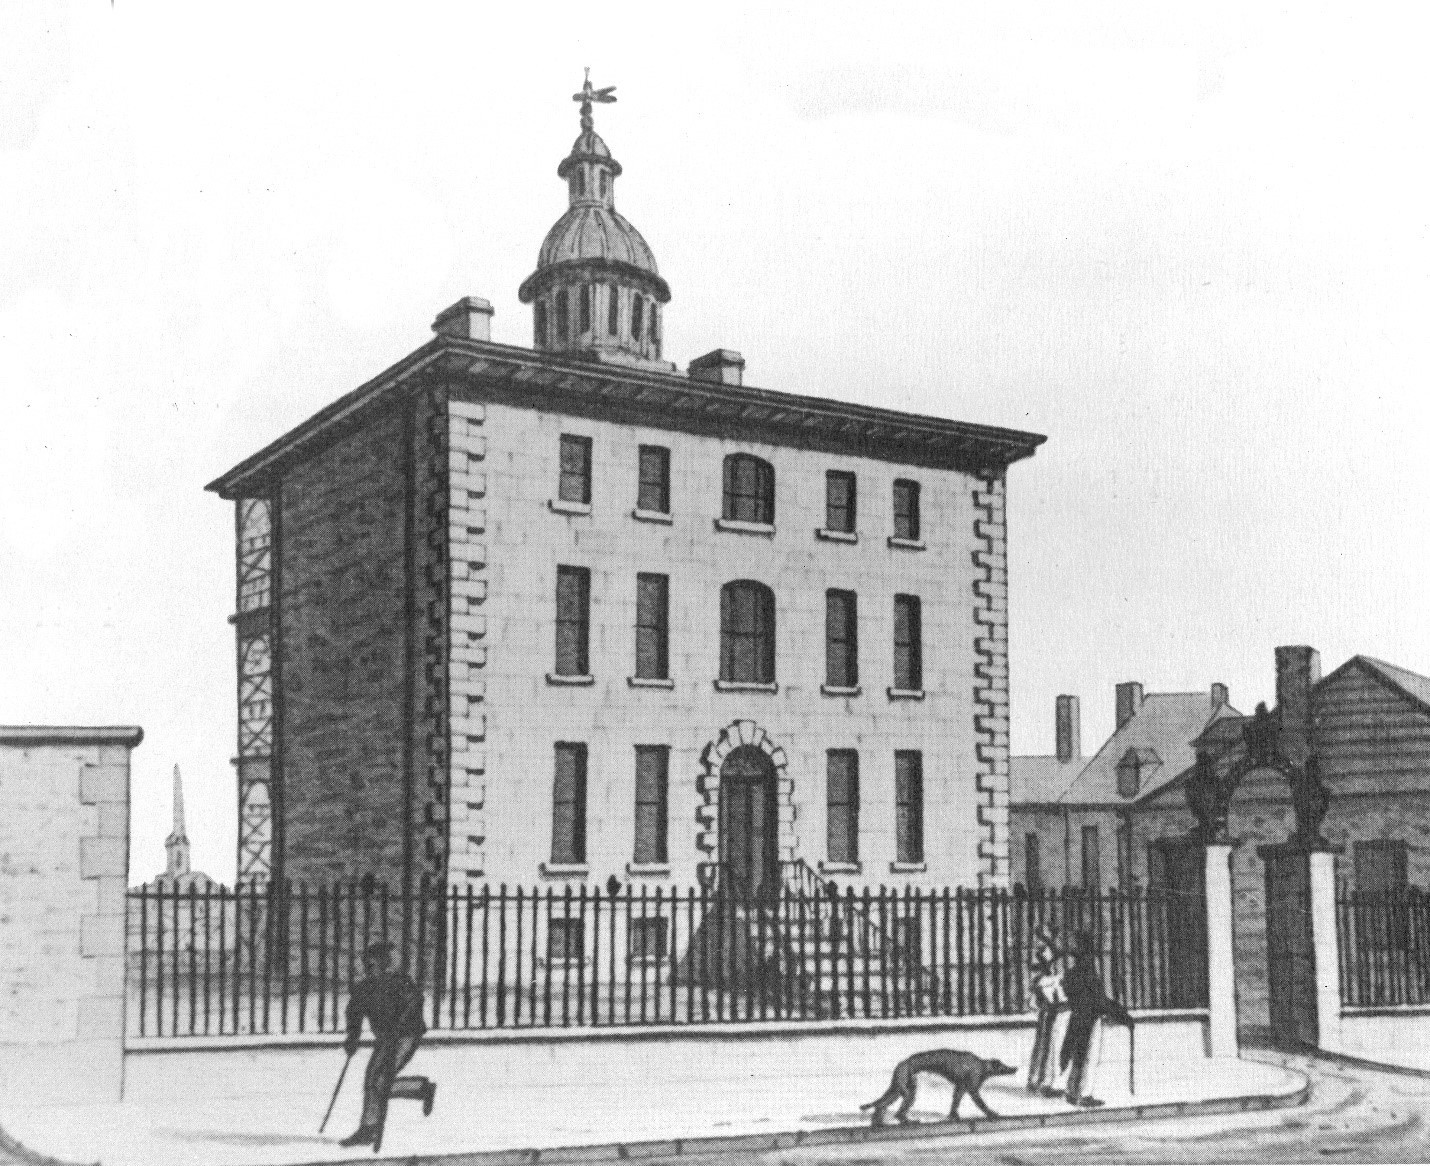 Original Montreal General Hospital building